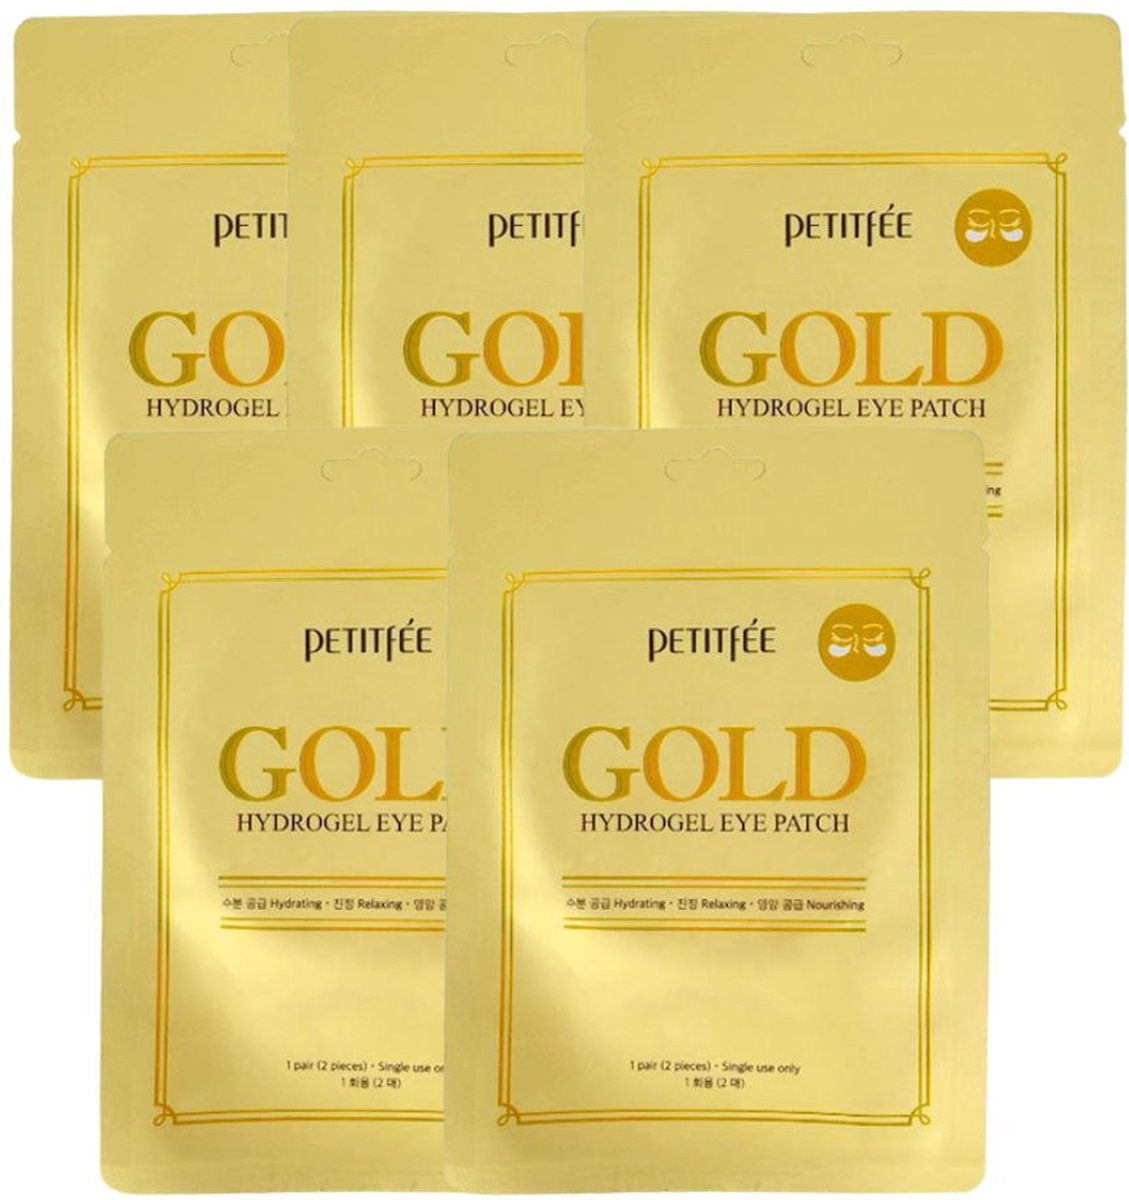 Petitfee Gold Hydrogel Eye Patch (1 pair, single use) 5 PACK - Korean Skincare